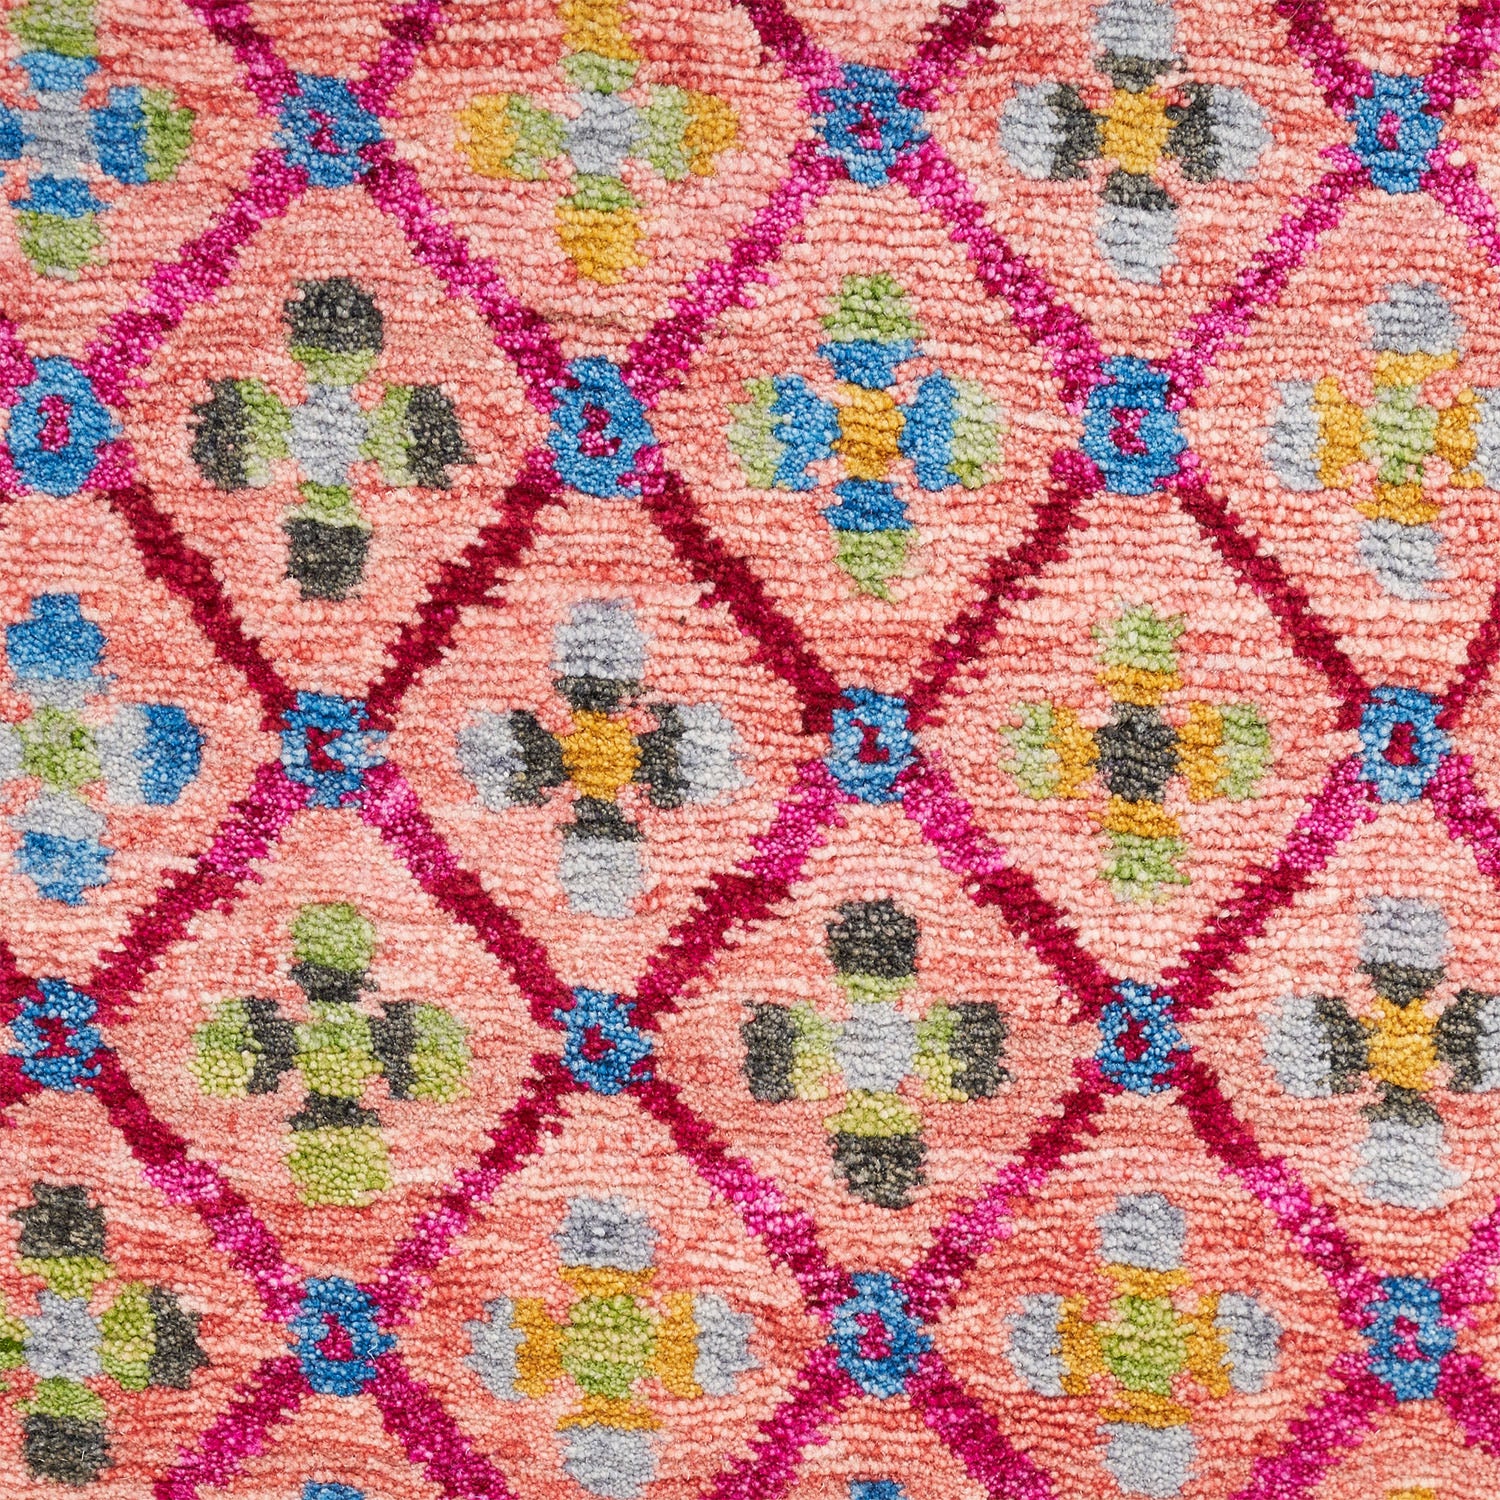 Close-up of a hand-woven textile showcasing vibrant diamond lattice pattern.